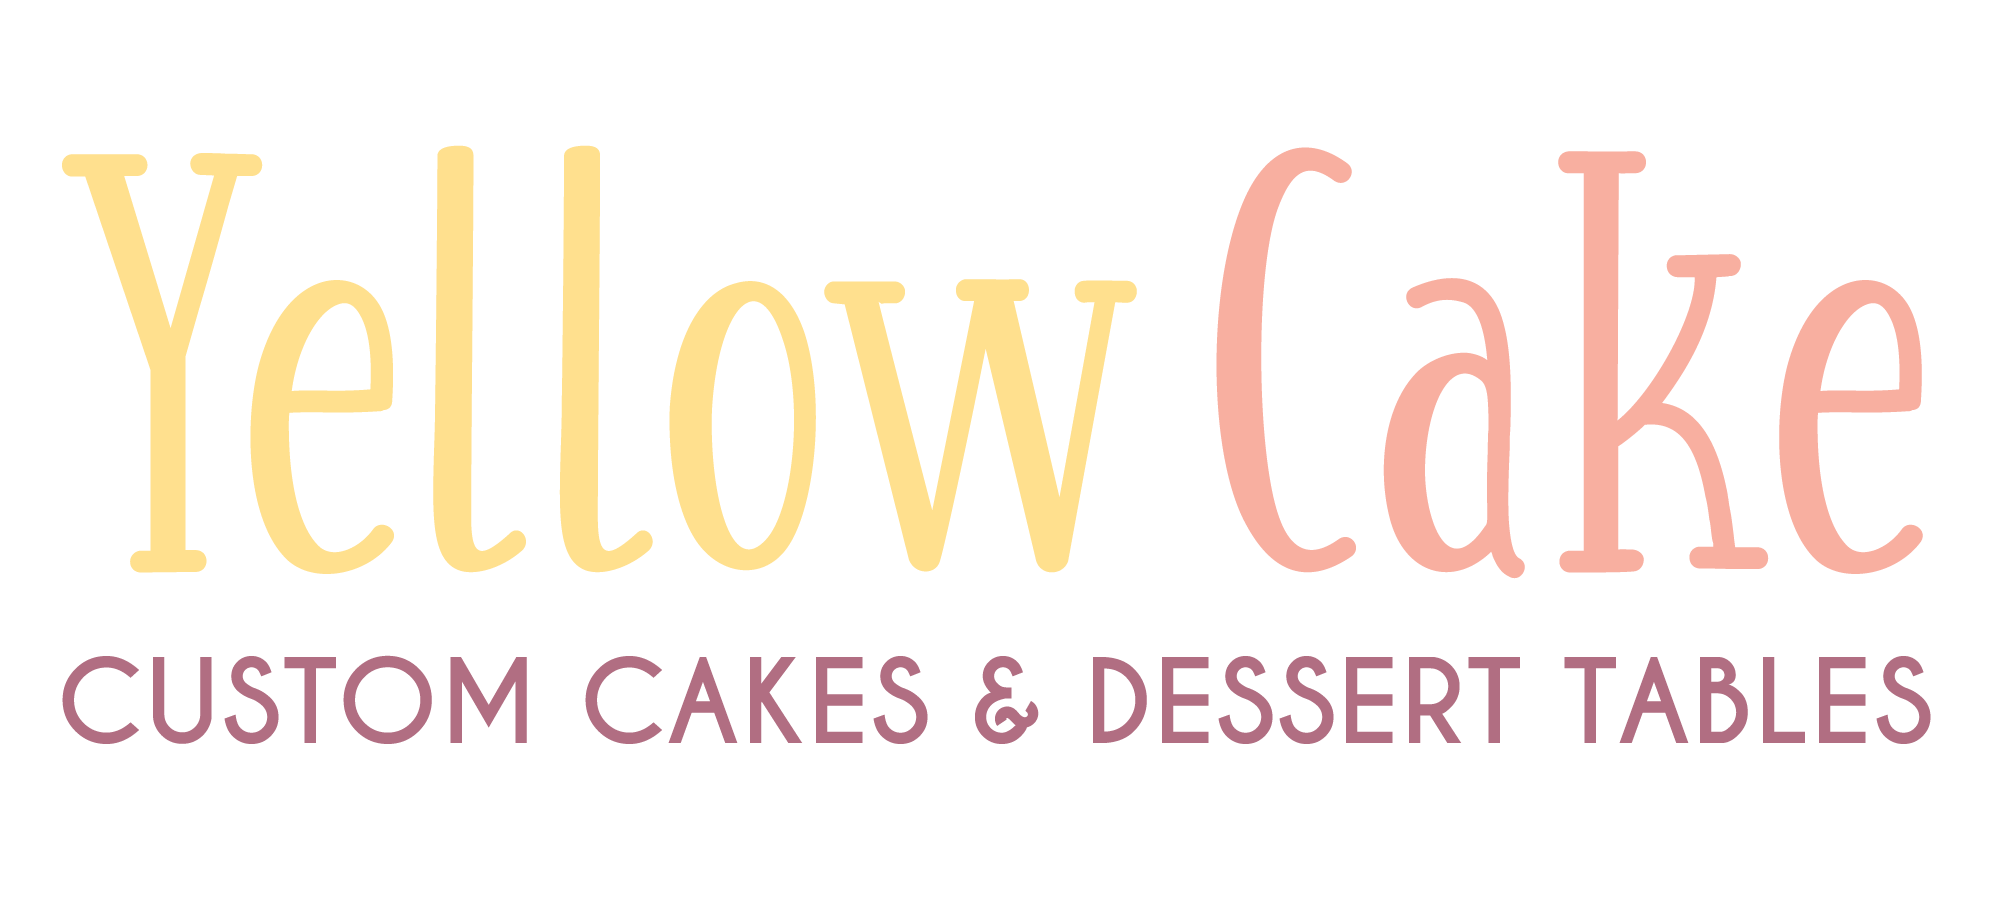 Yellowcake Desserts